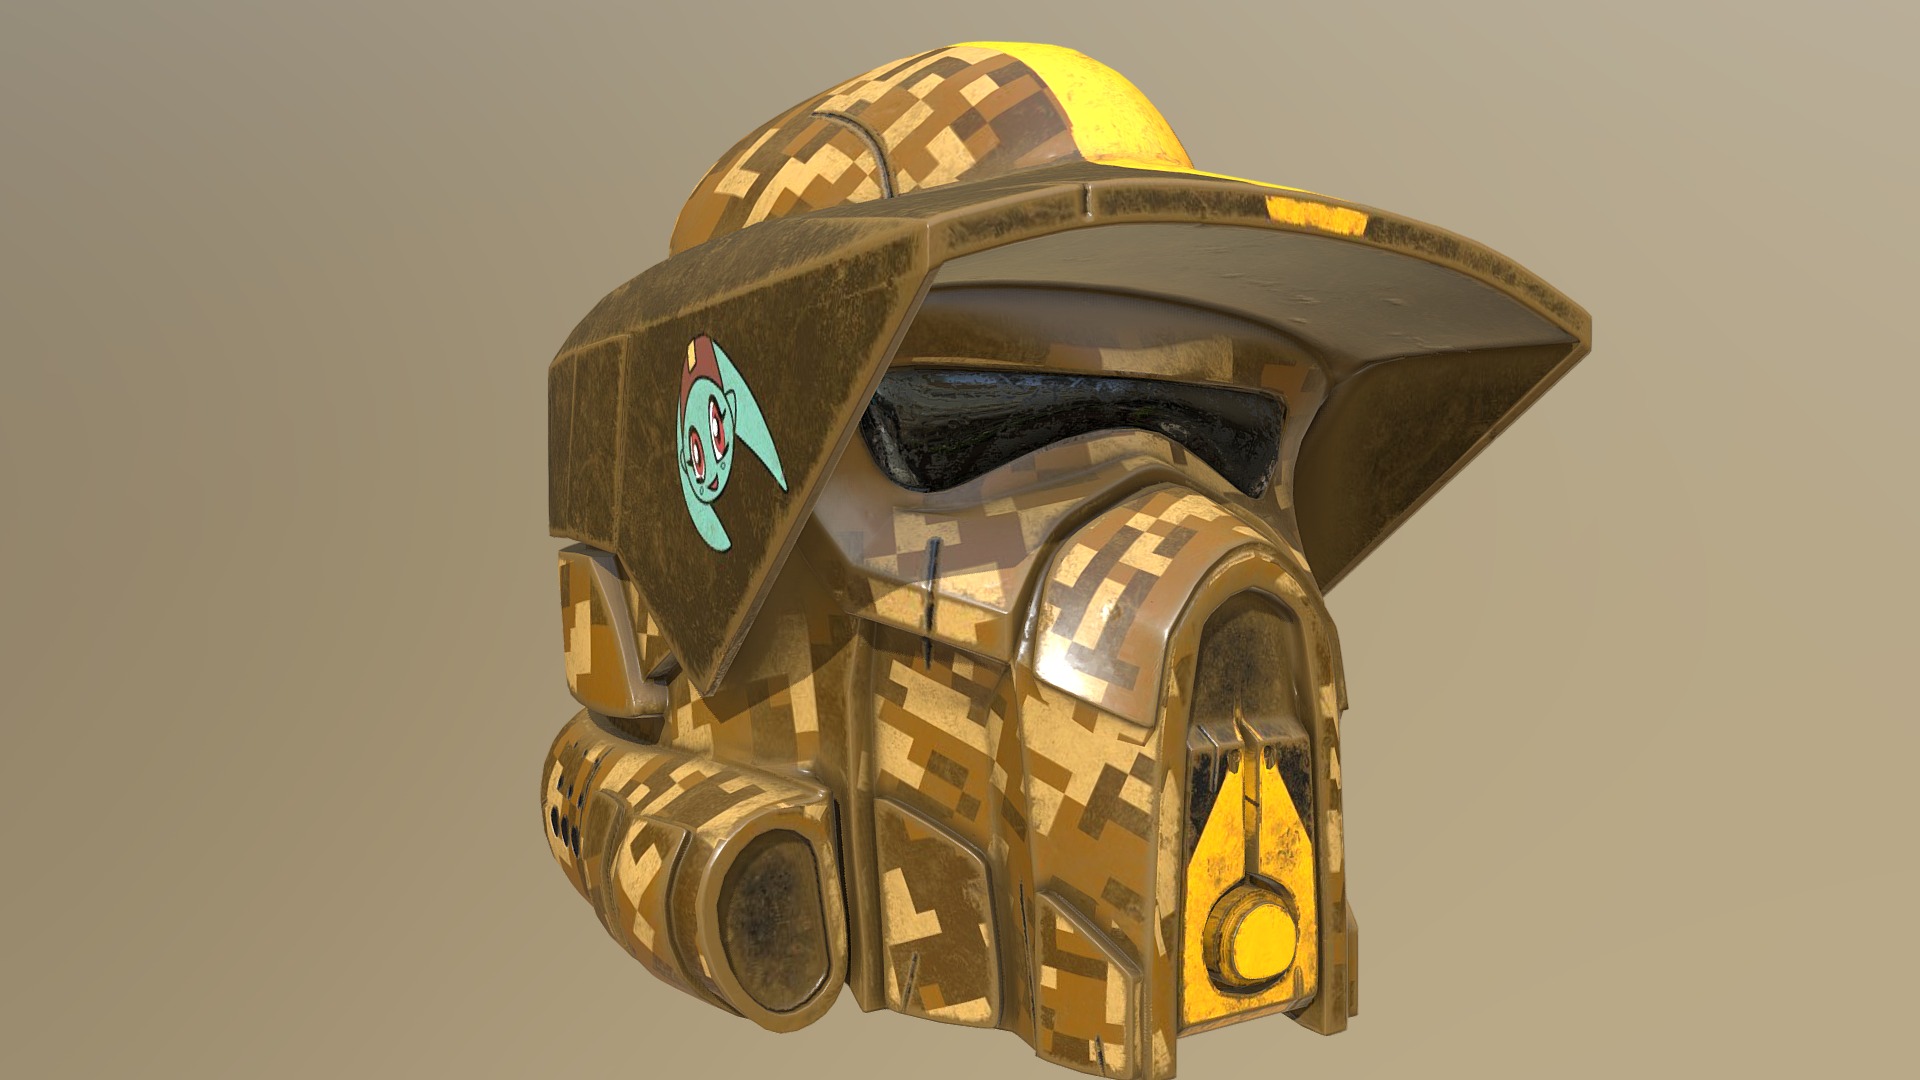 Waxer helmet clone wars ARF trooper